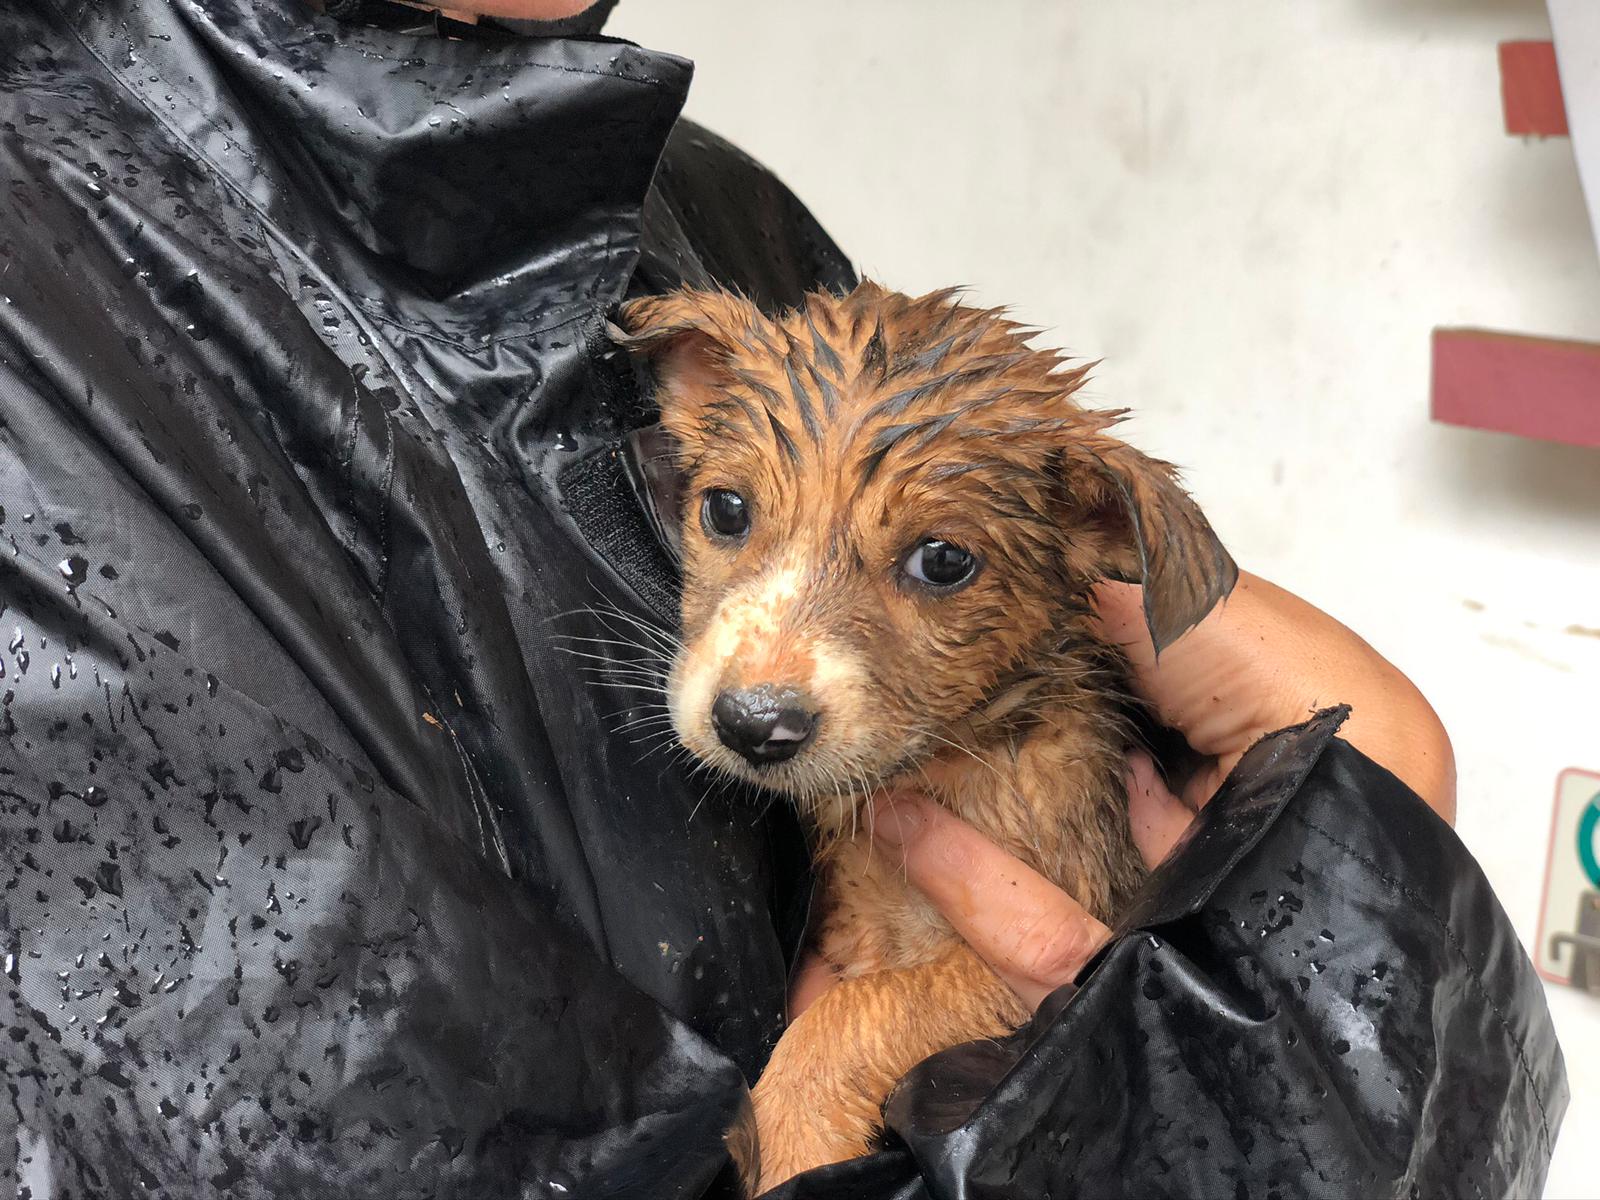 dumped puppy sri lanka street dog